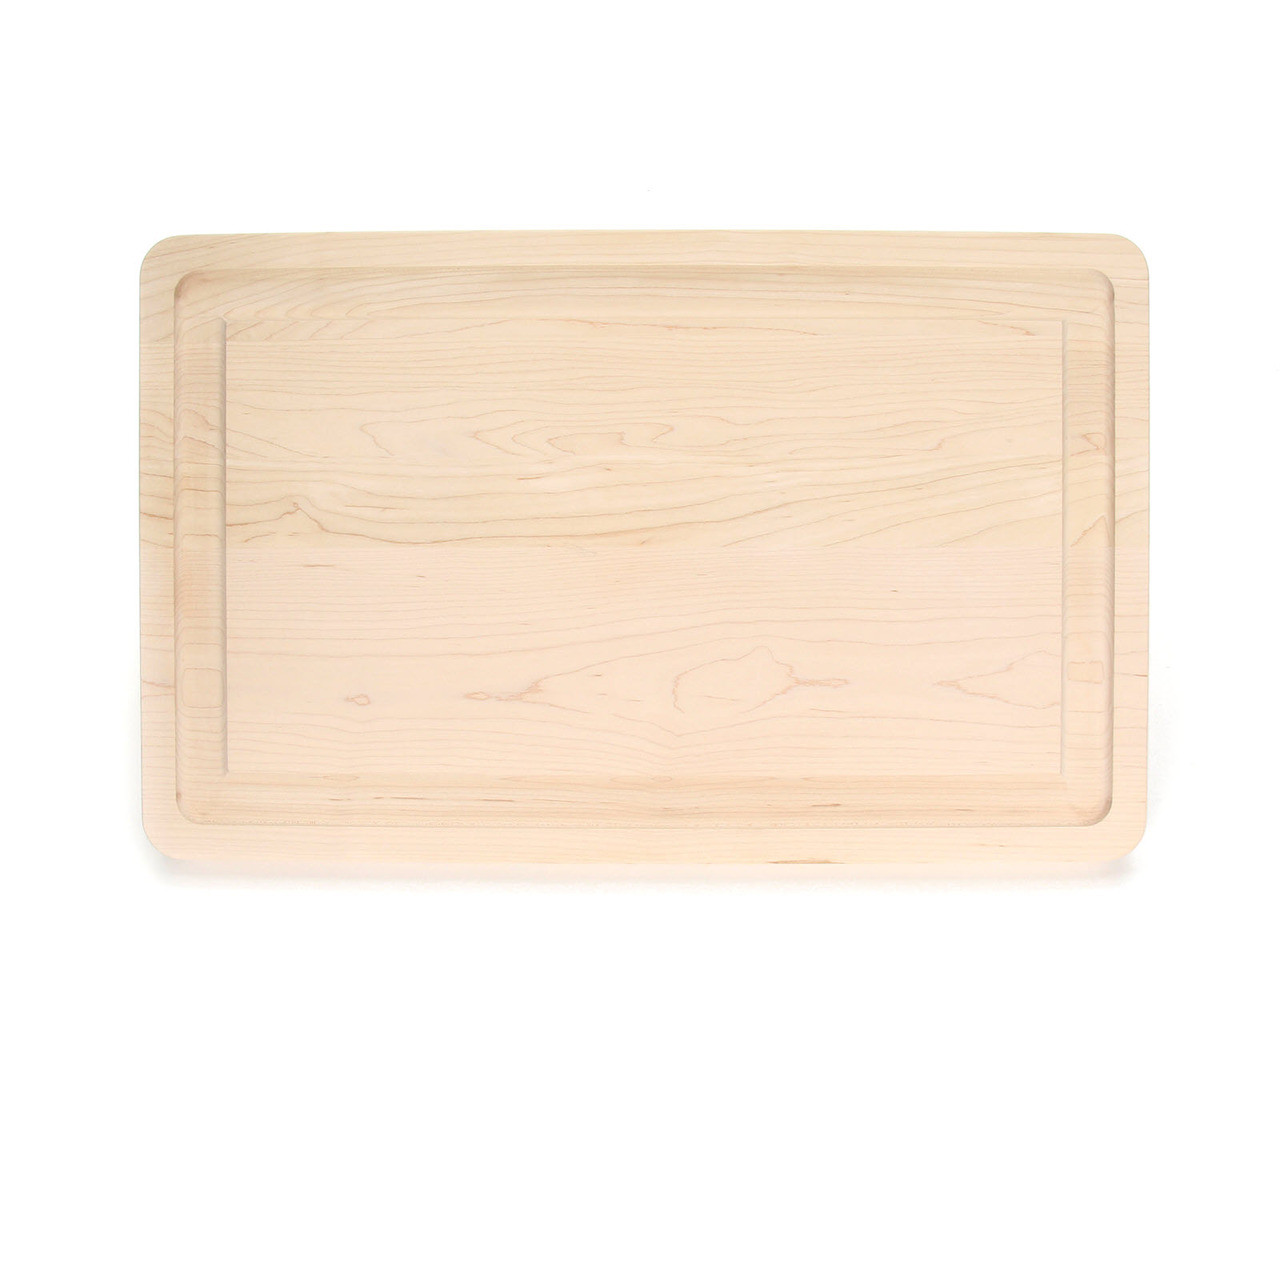 BigWood Boards Wiltshire 15 x 24 Cutting Board - Maple (No Handles)